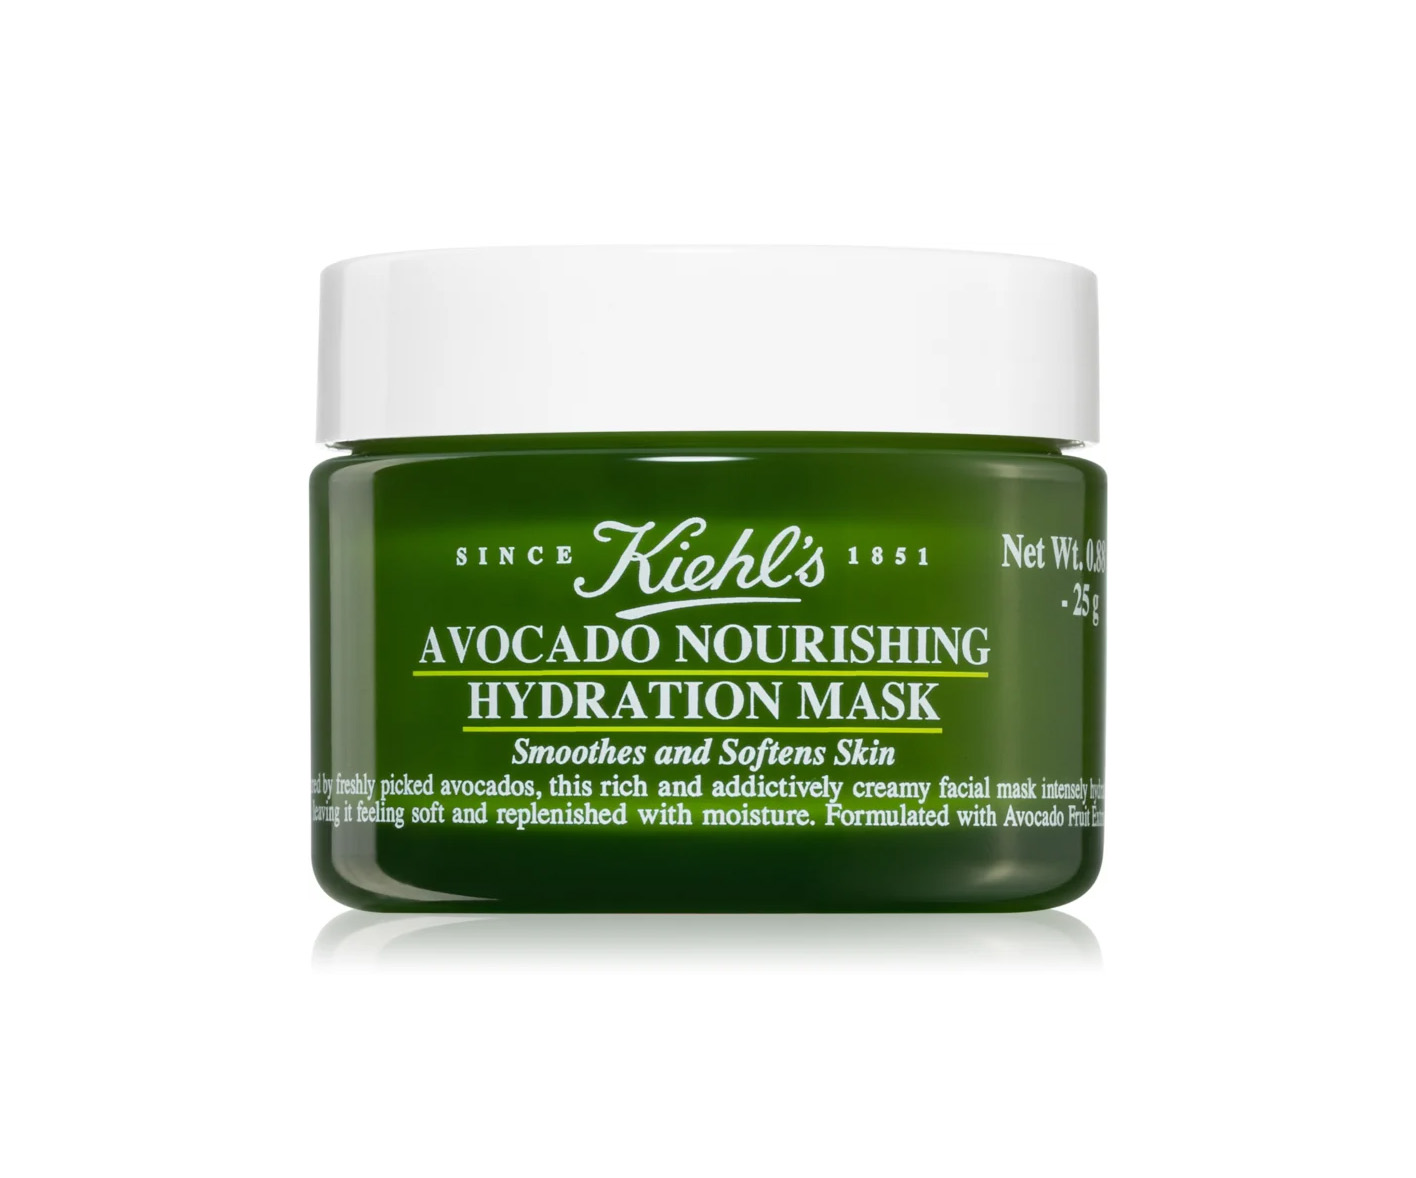 Kiehls Avocado Nourishing Hydration Mask, mască cu avocado